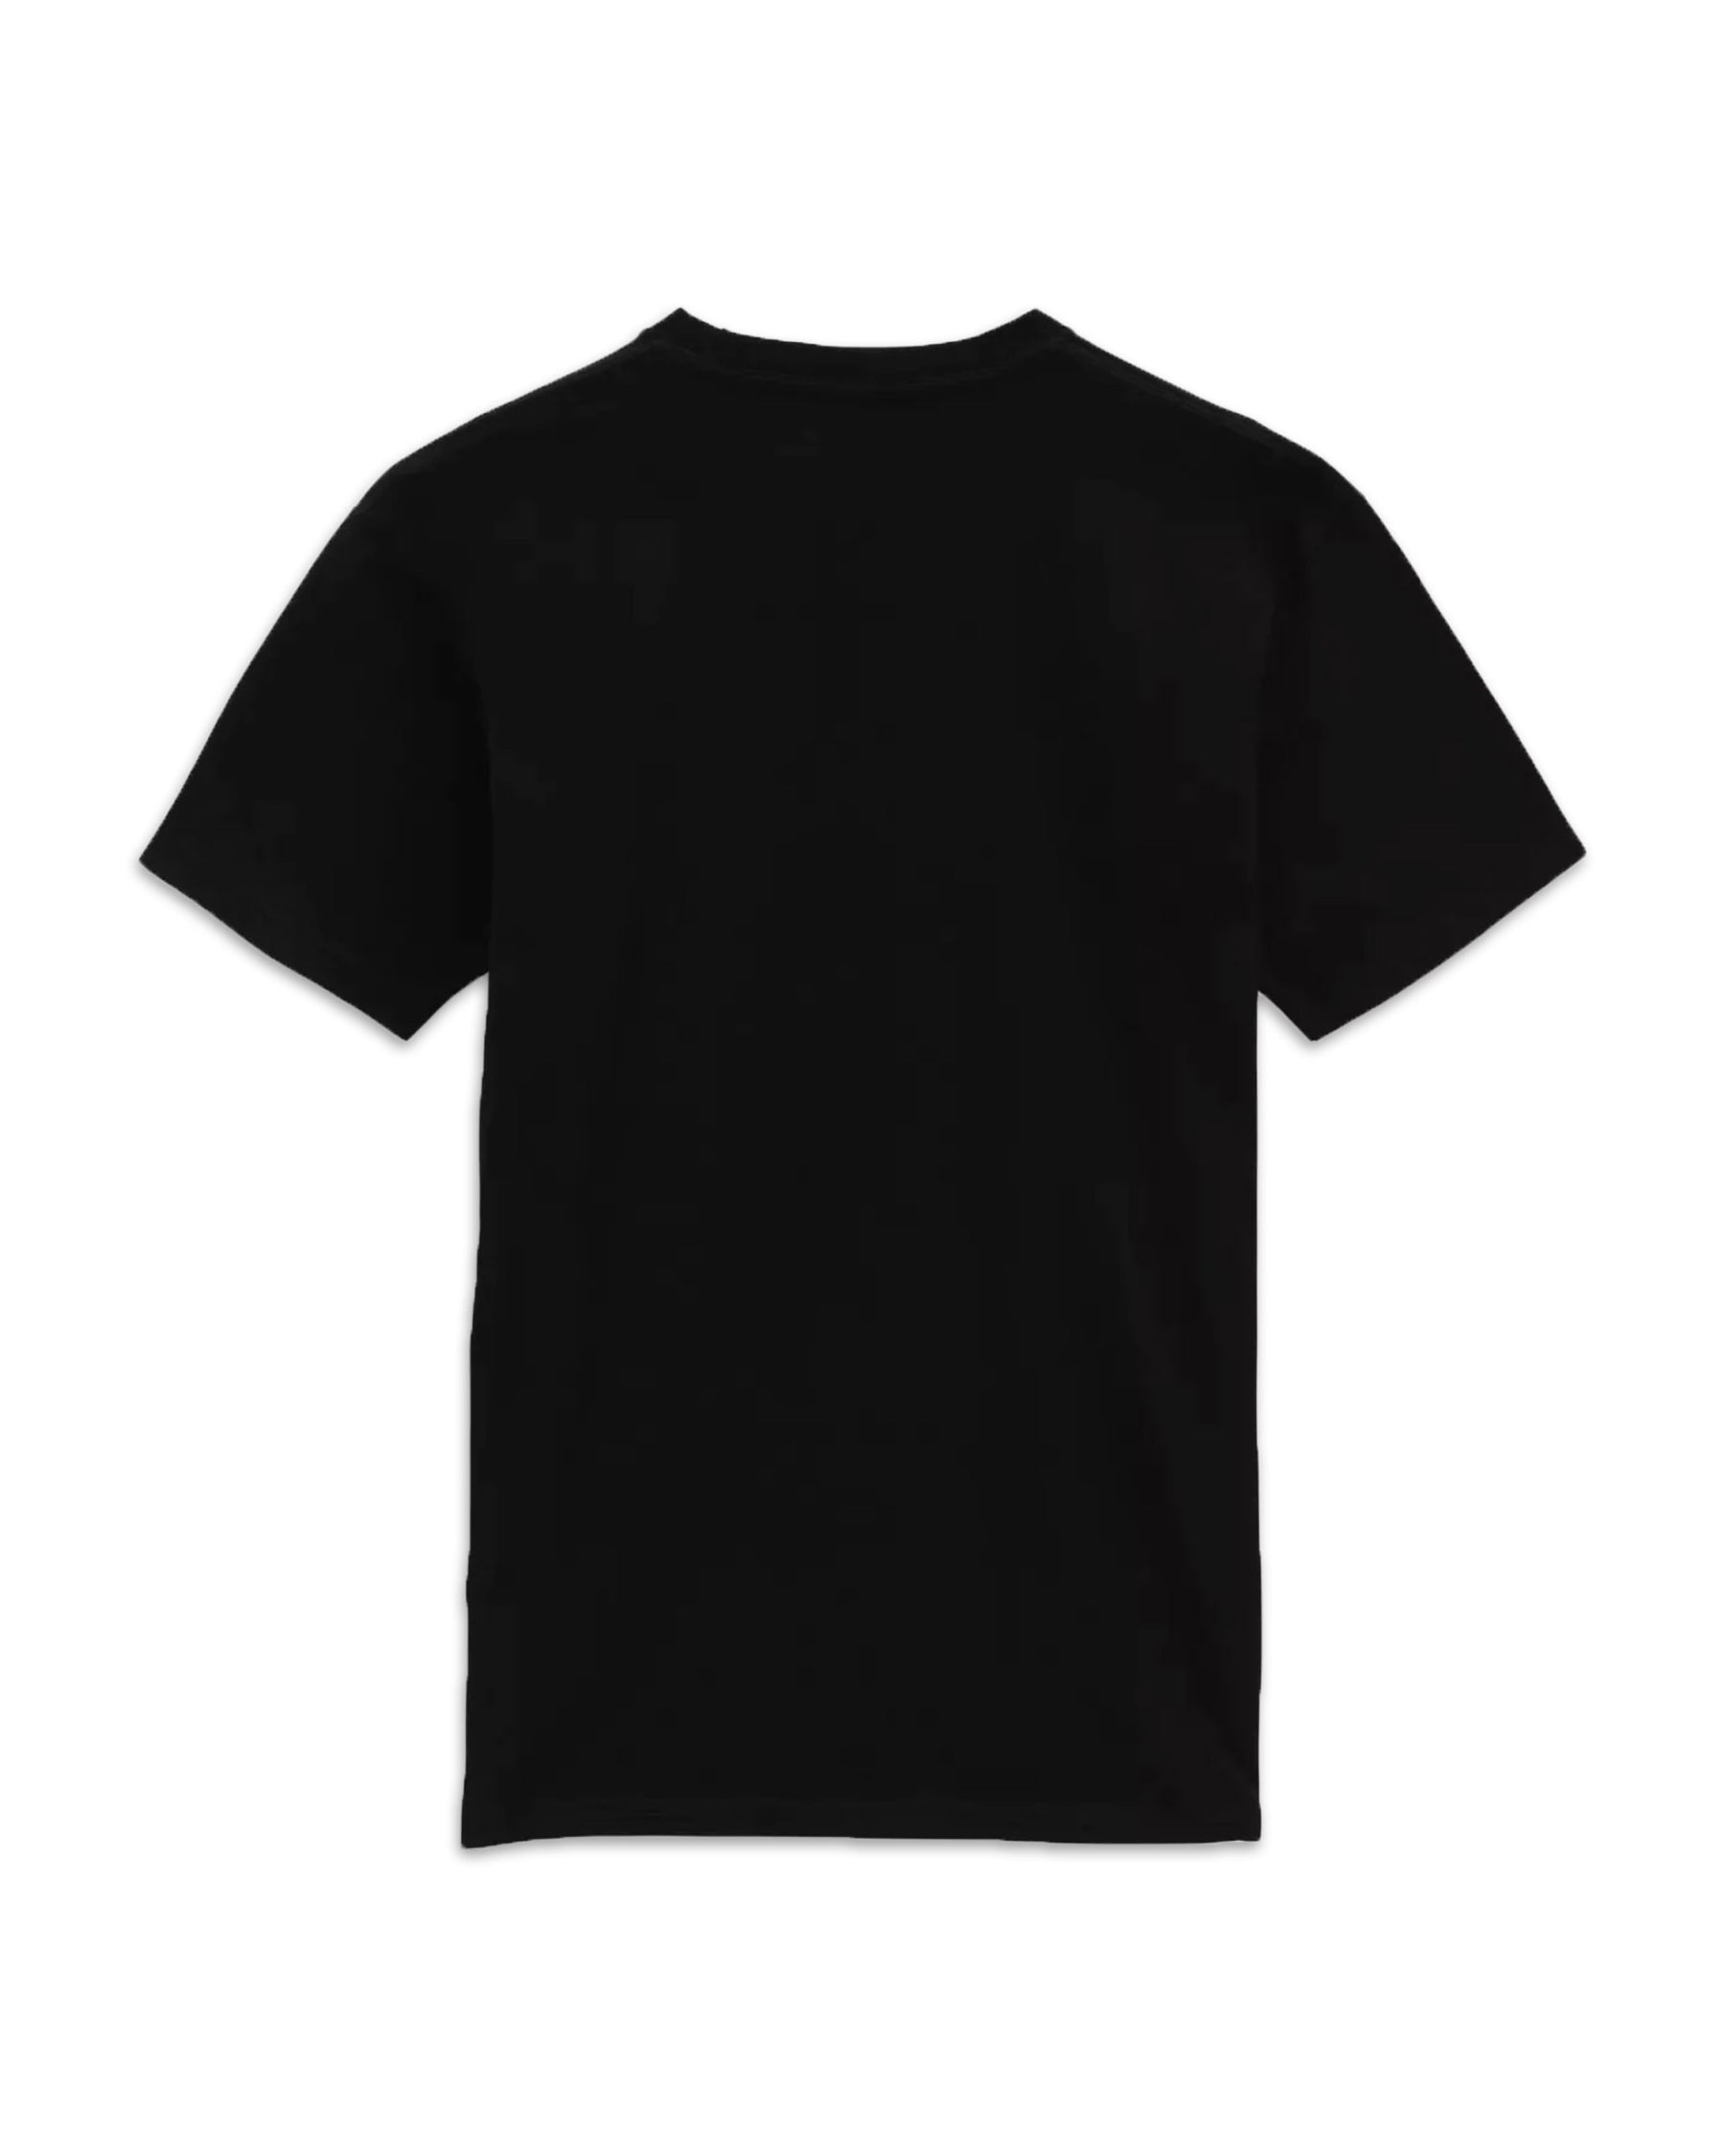 T-Shirt Vans X Crayola Hot Flower Black